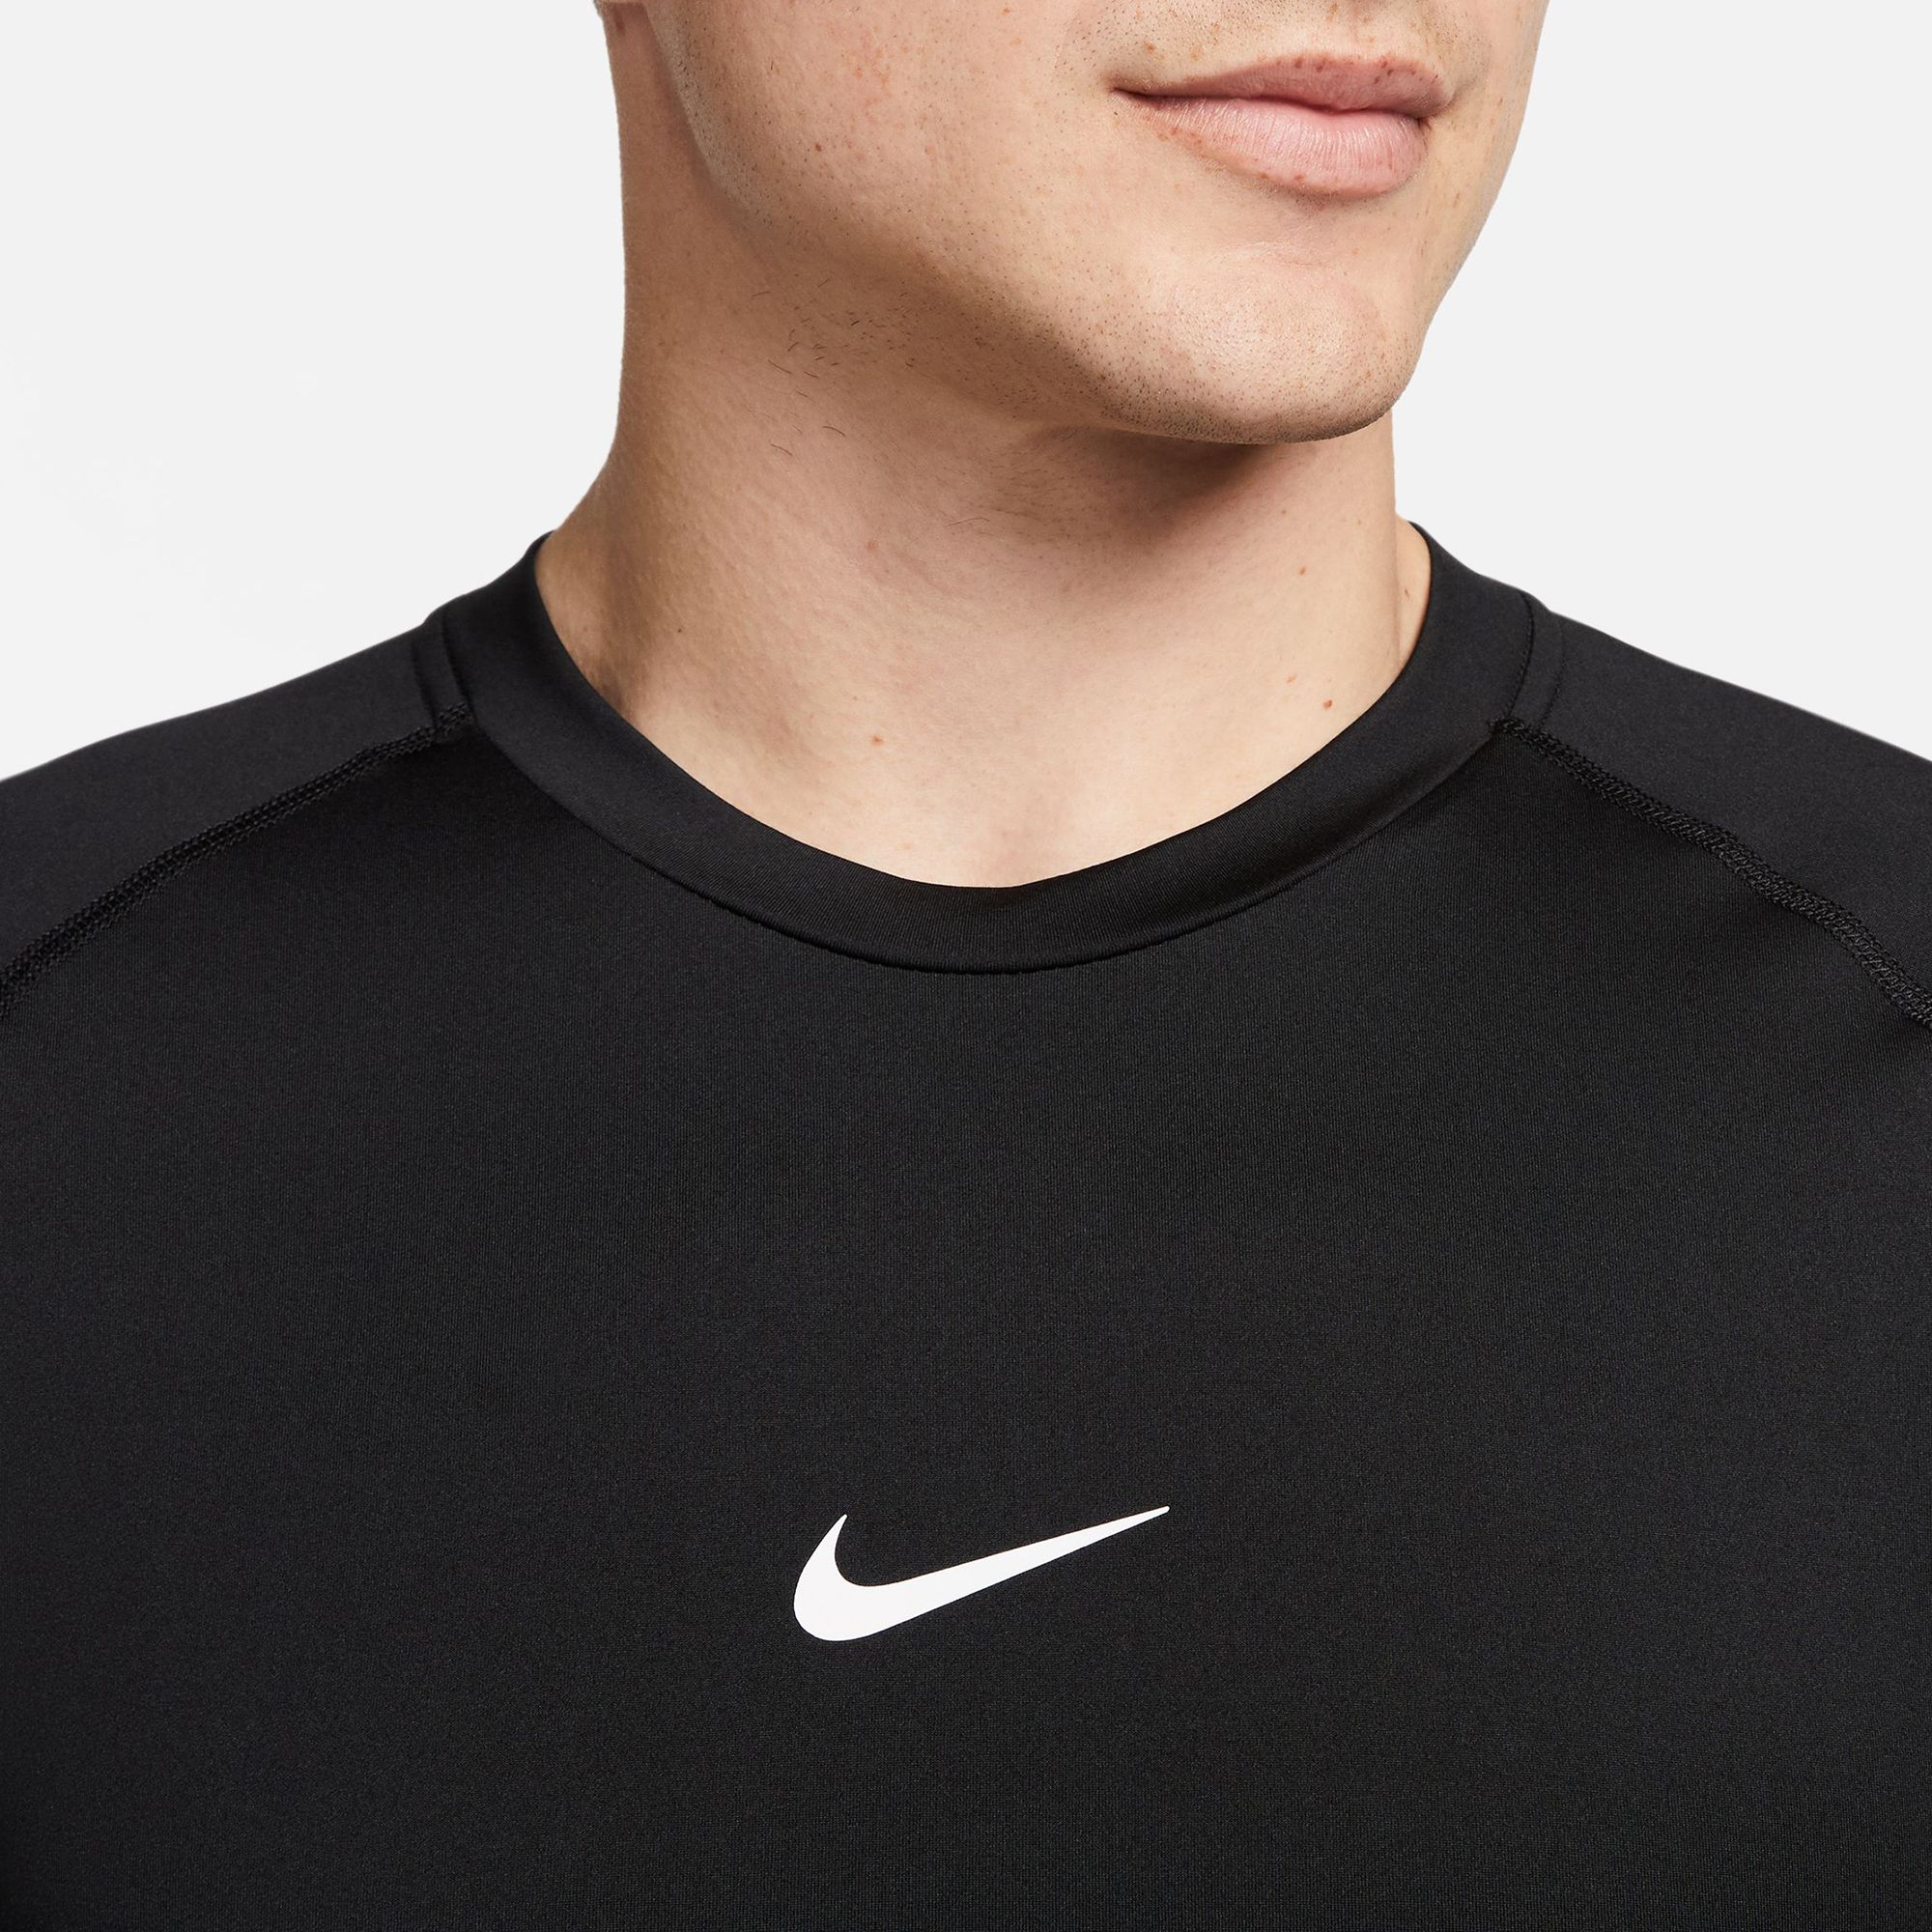 Nike Men's Pro Dri-FIT Slim Fit Short Sleeve T-Shirt